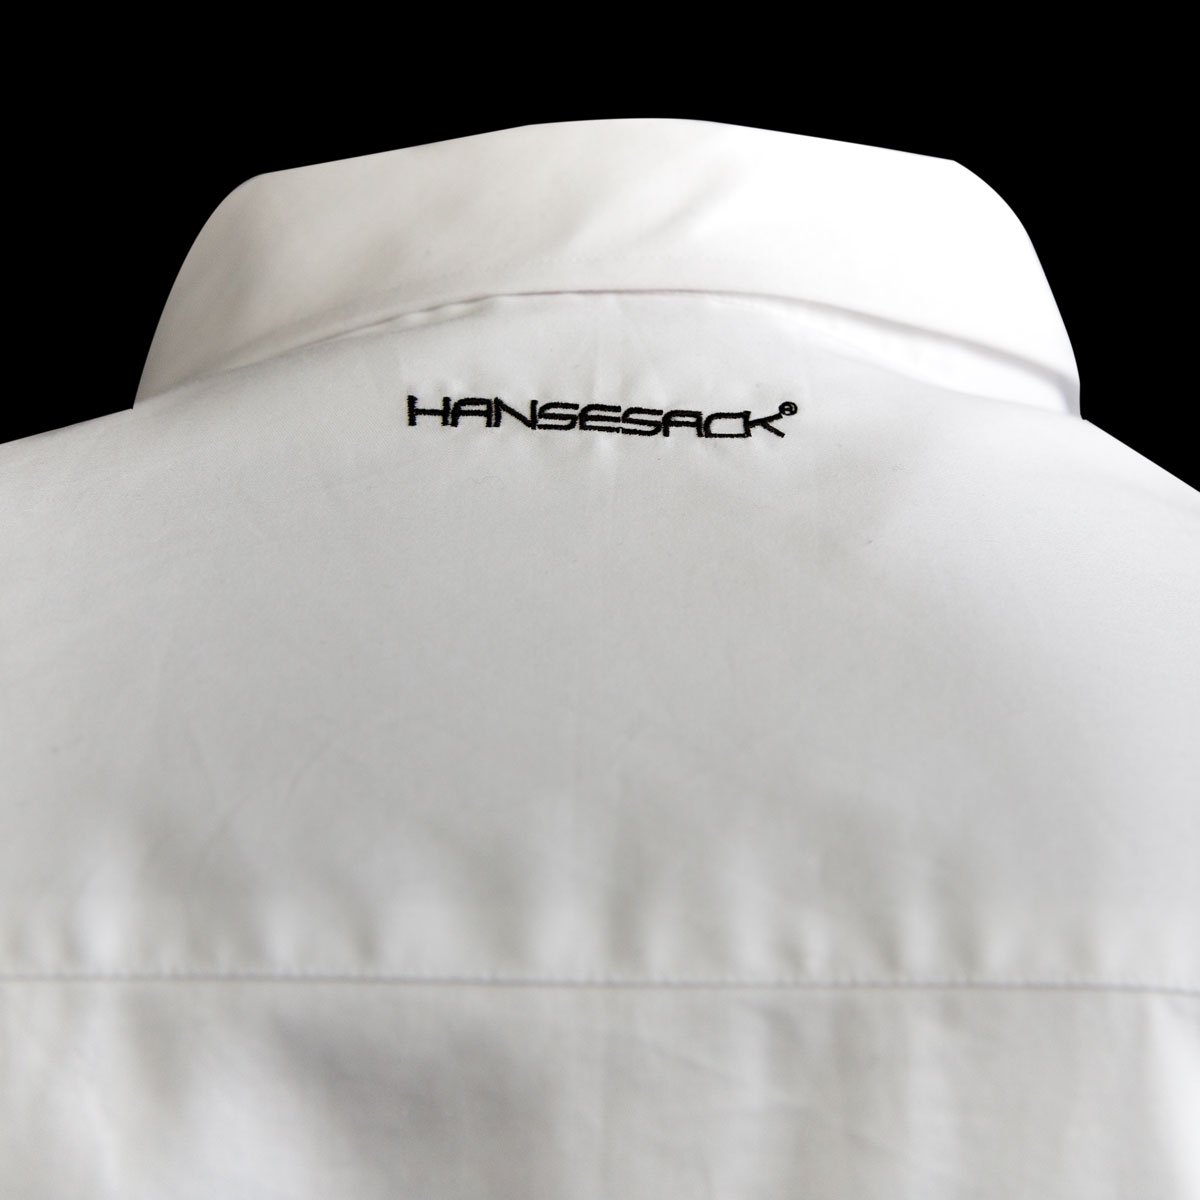 Hansesack Produktbild weißes Business-Hemd  seidig glänzend von hinten Nahaufnahme Hansesack Schriftzug